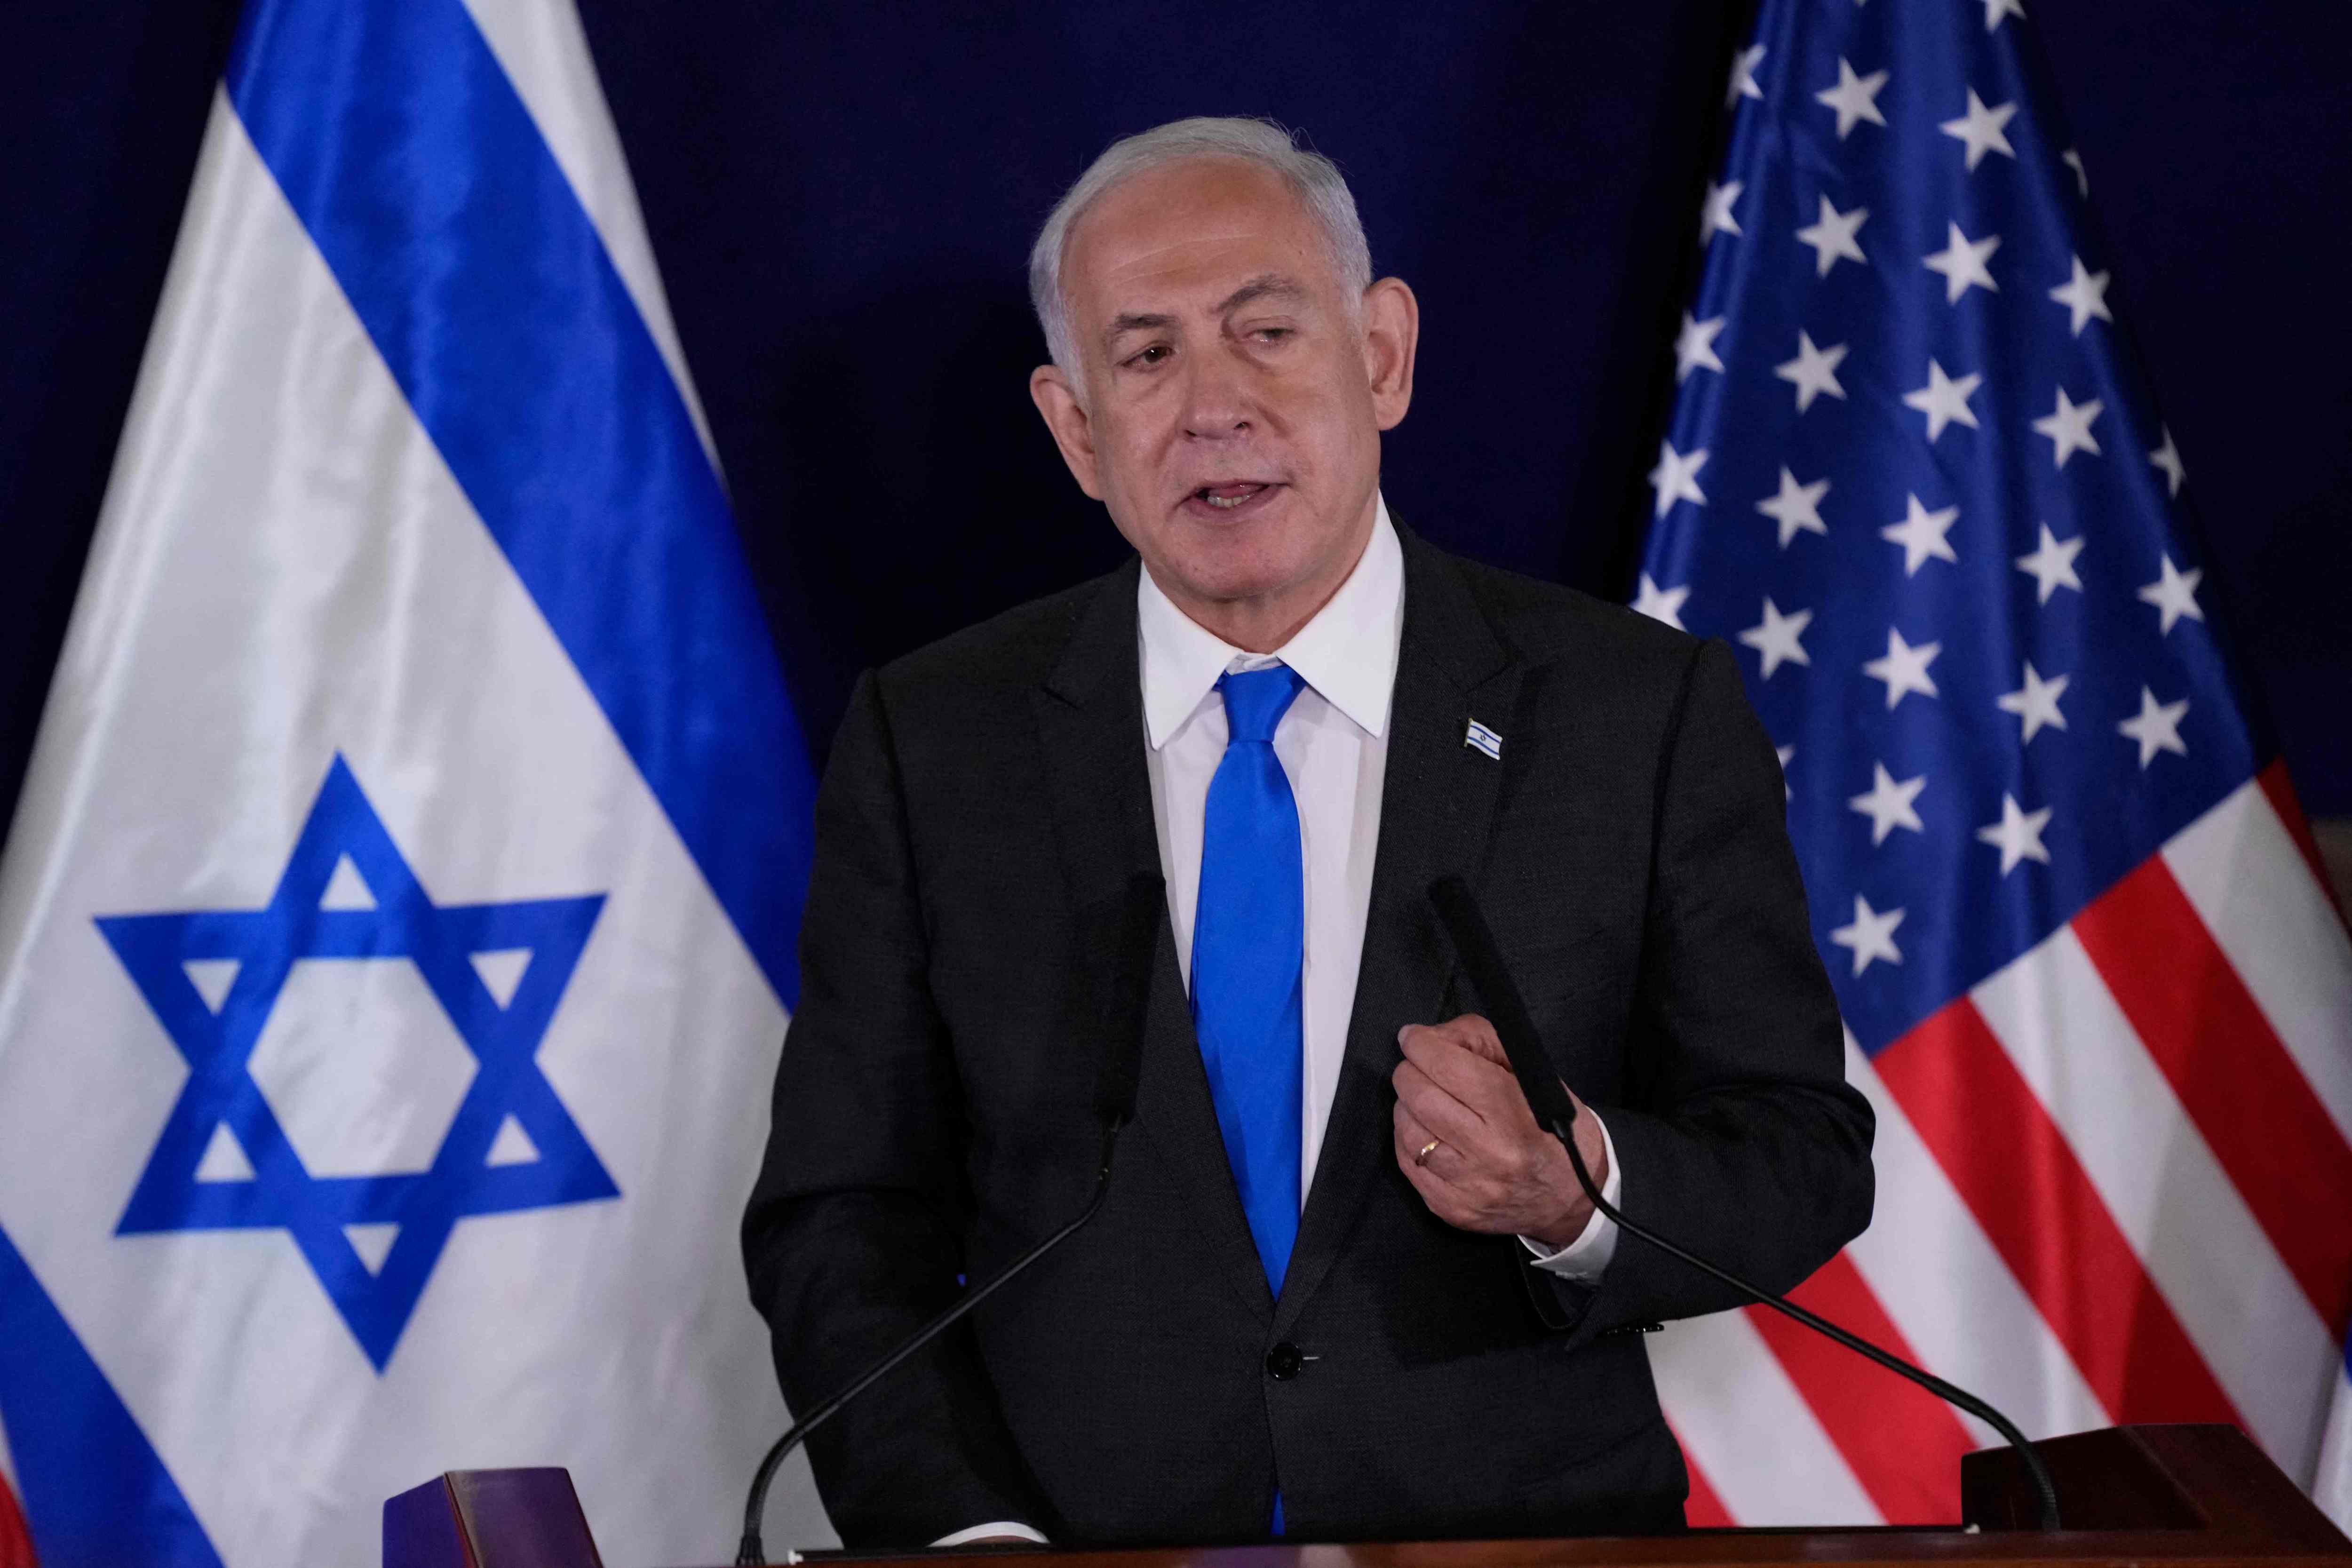 ICC rulings would set dangerous precedent, Netanyahu warns